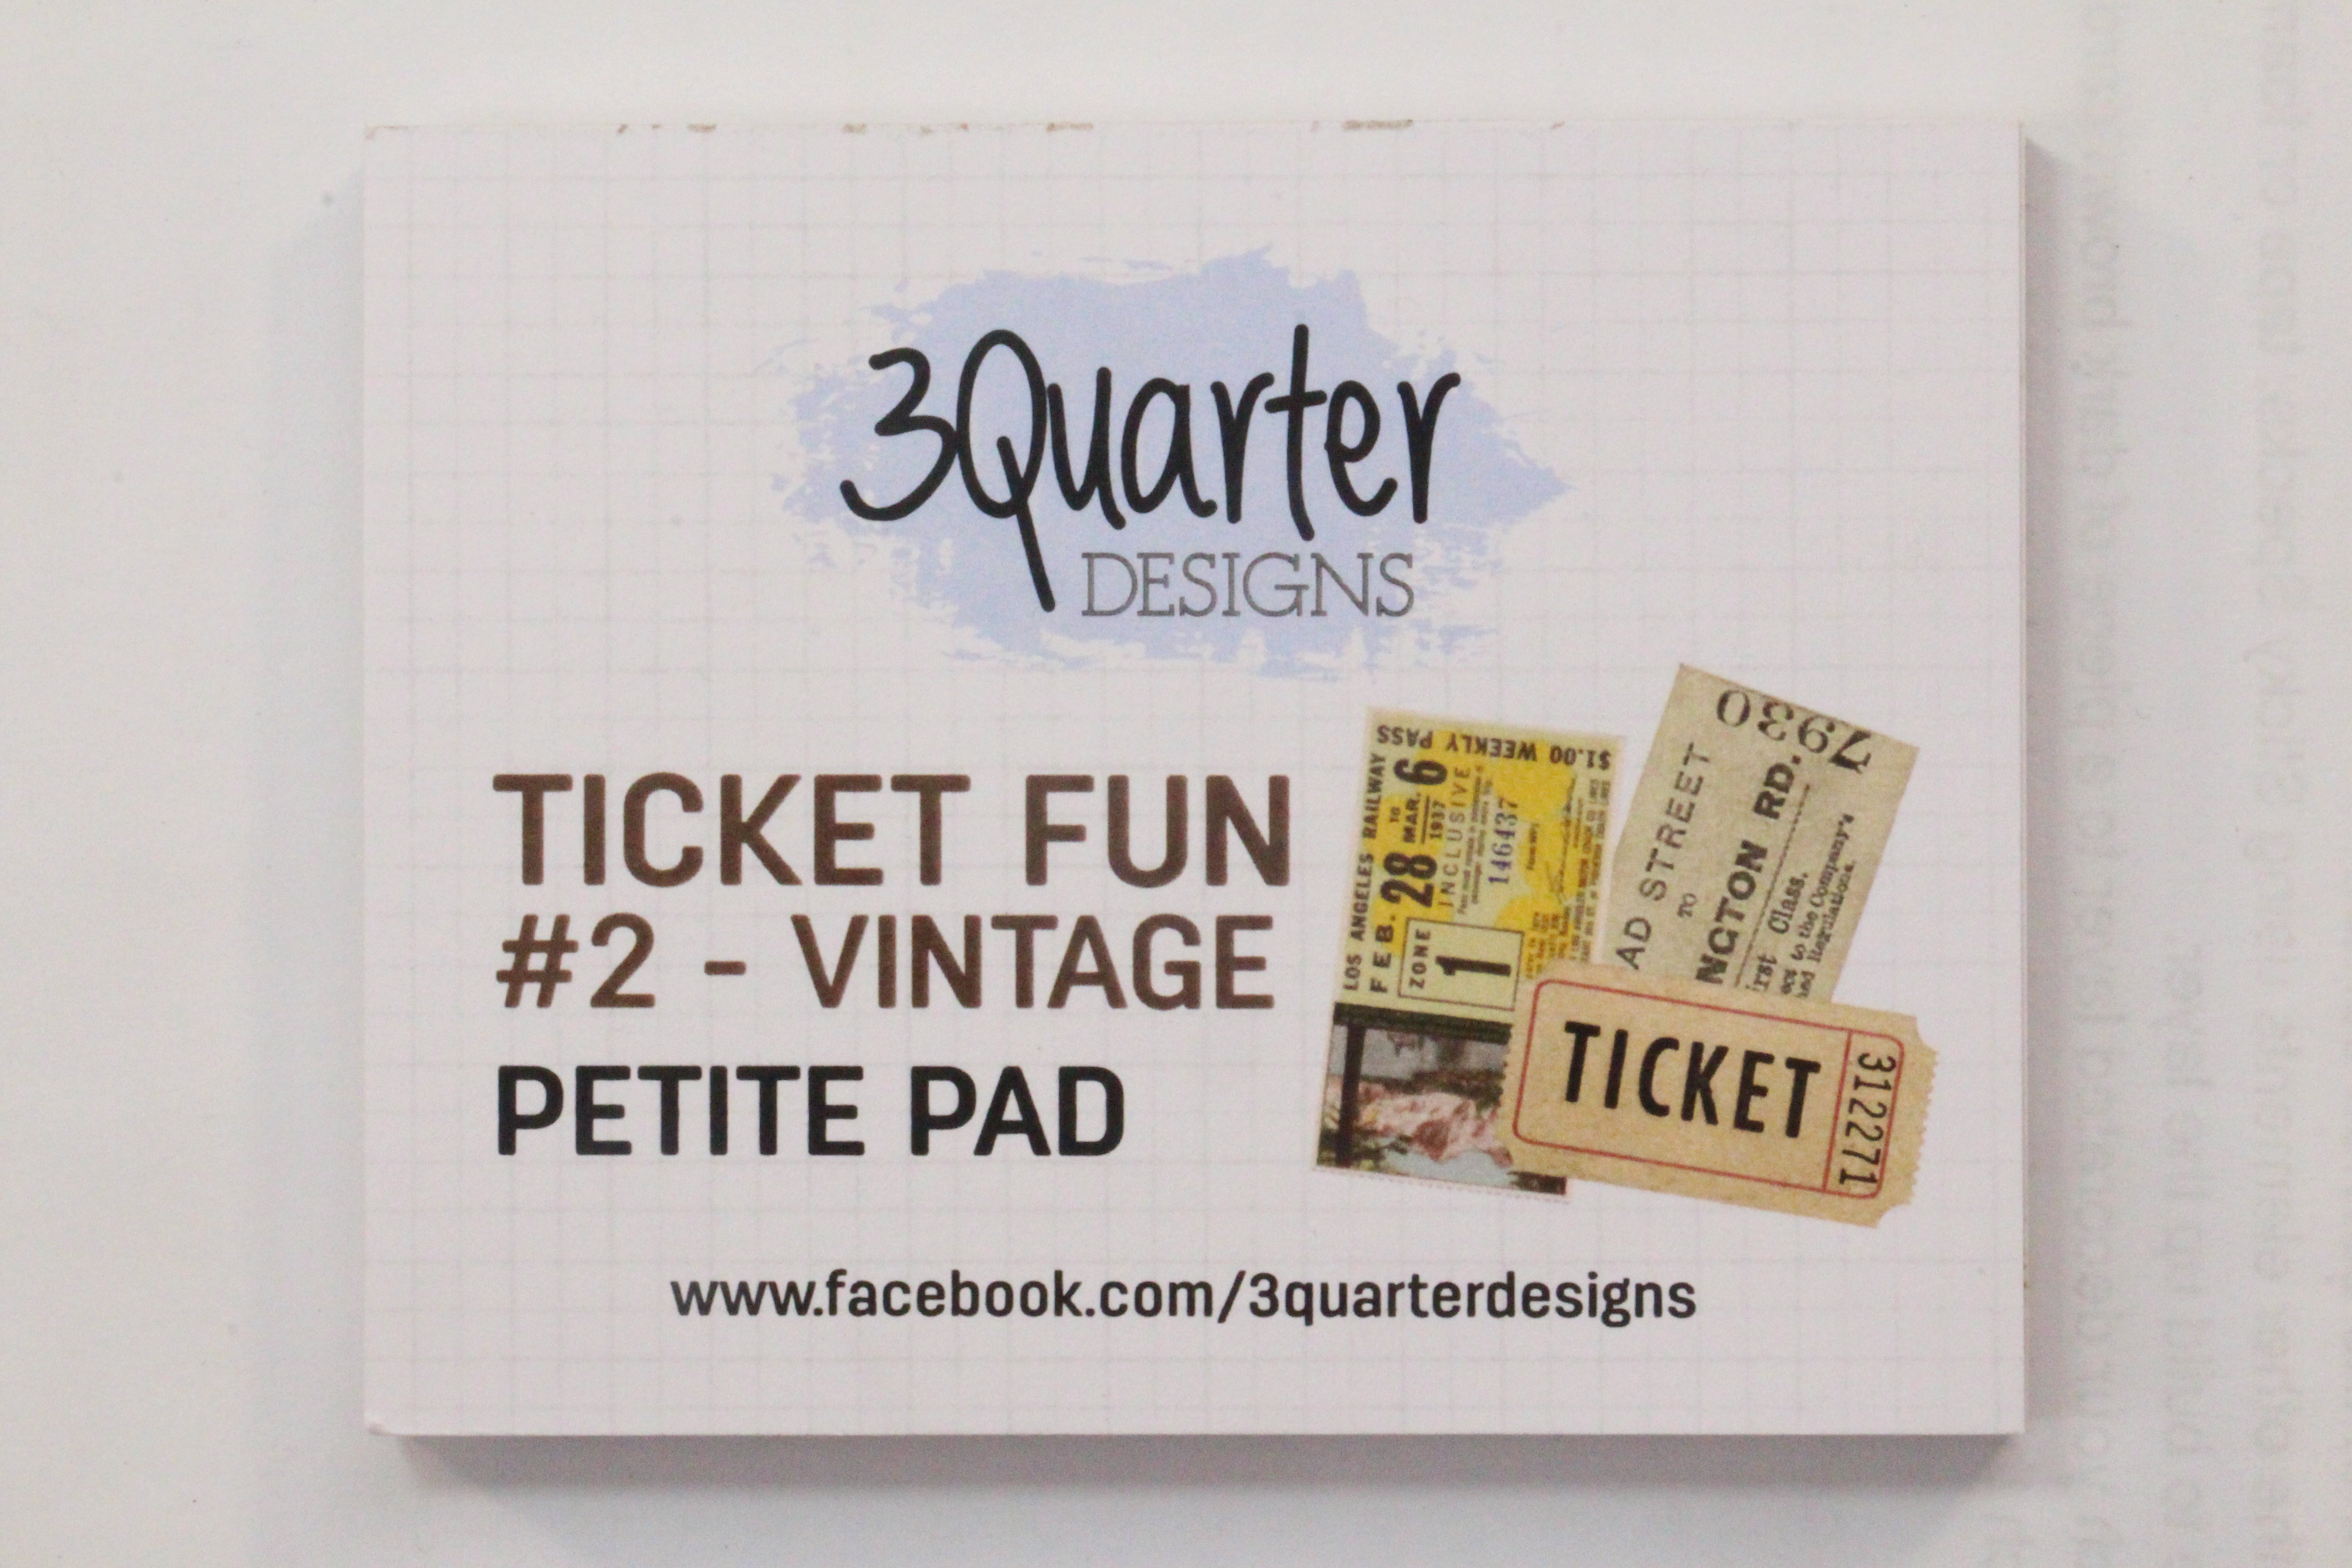 Petite Pad - Ticket Fun #2 - Vintage